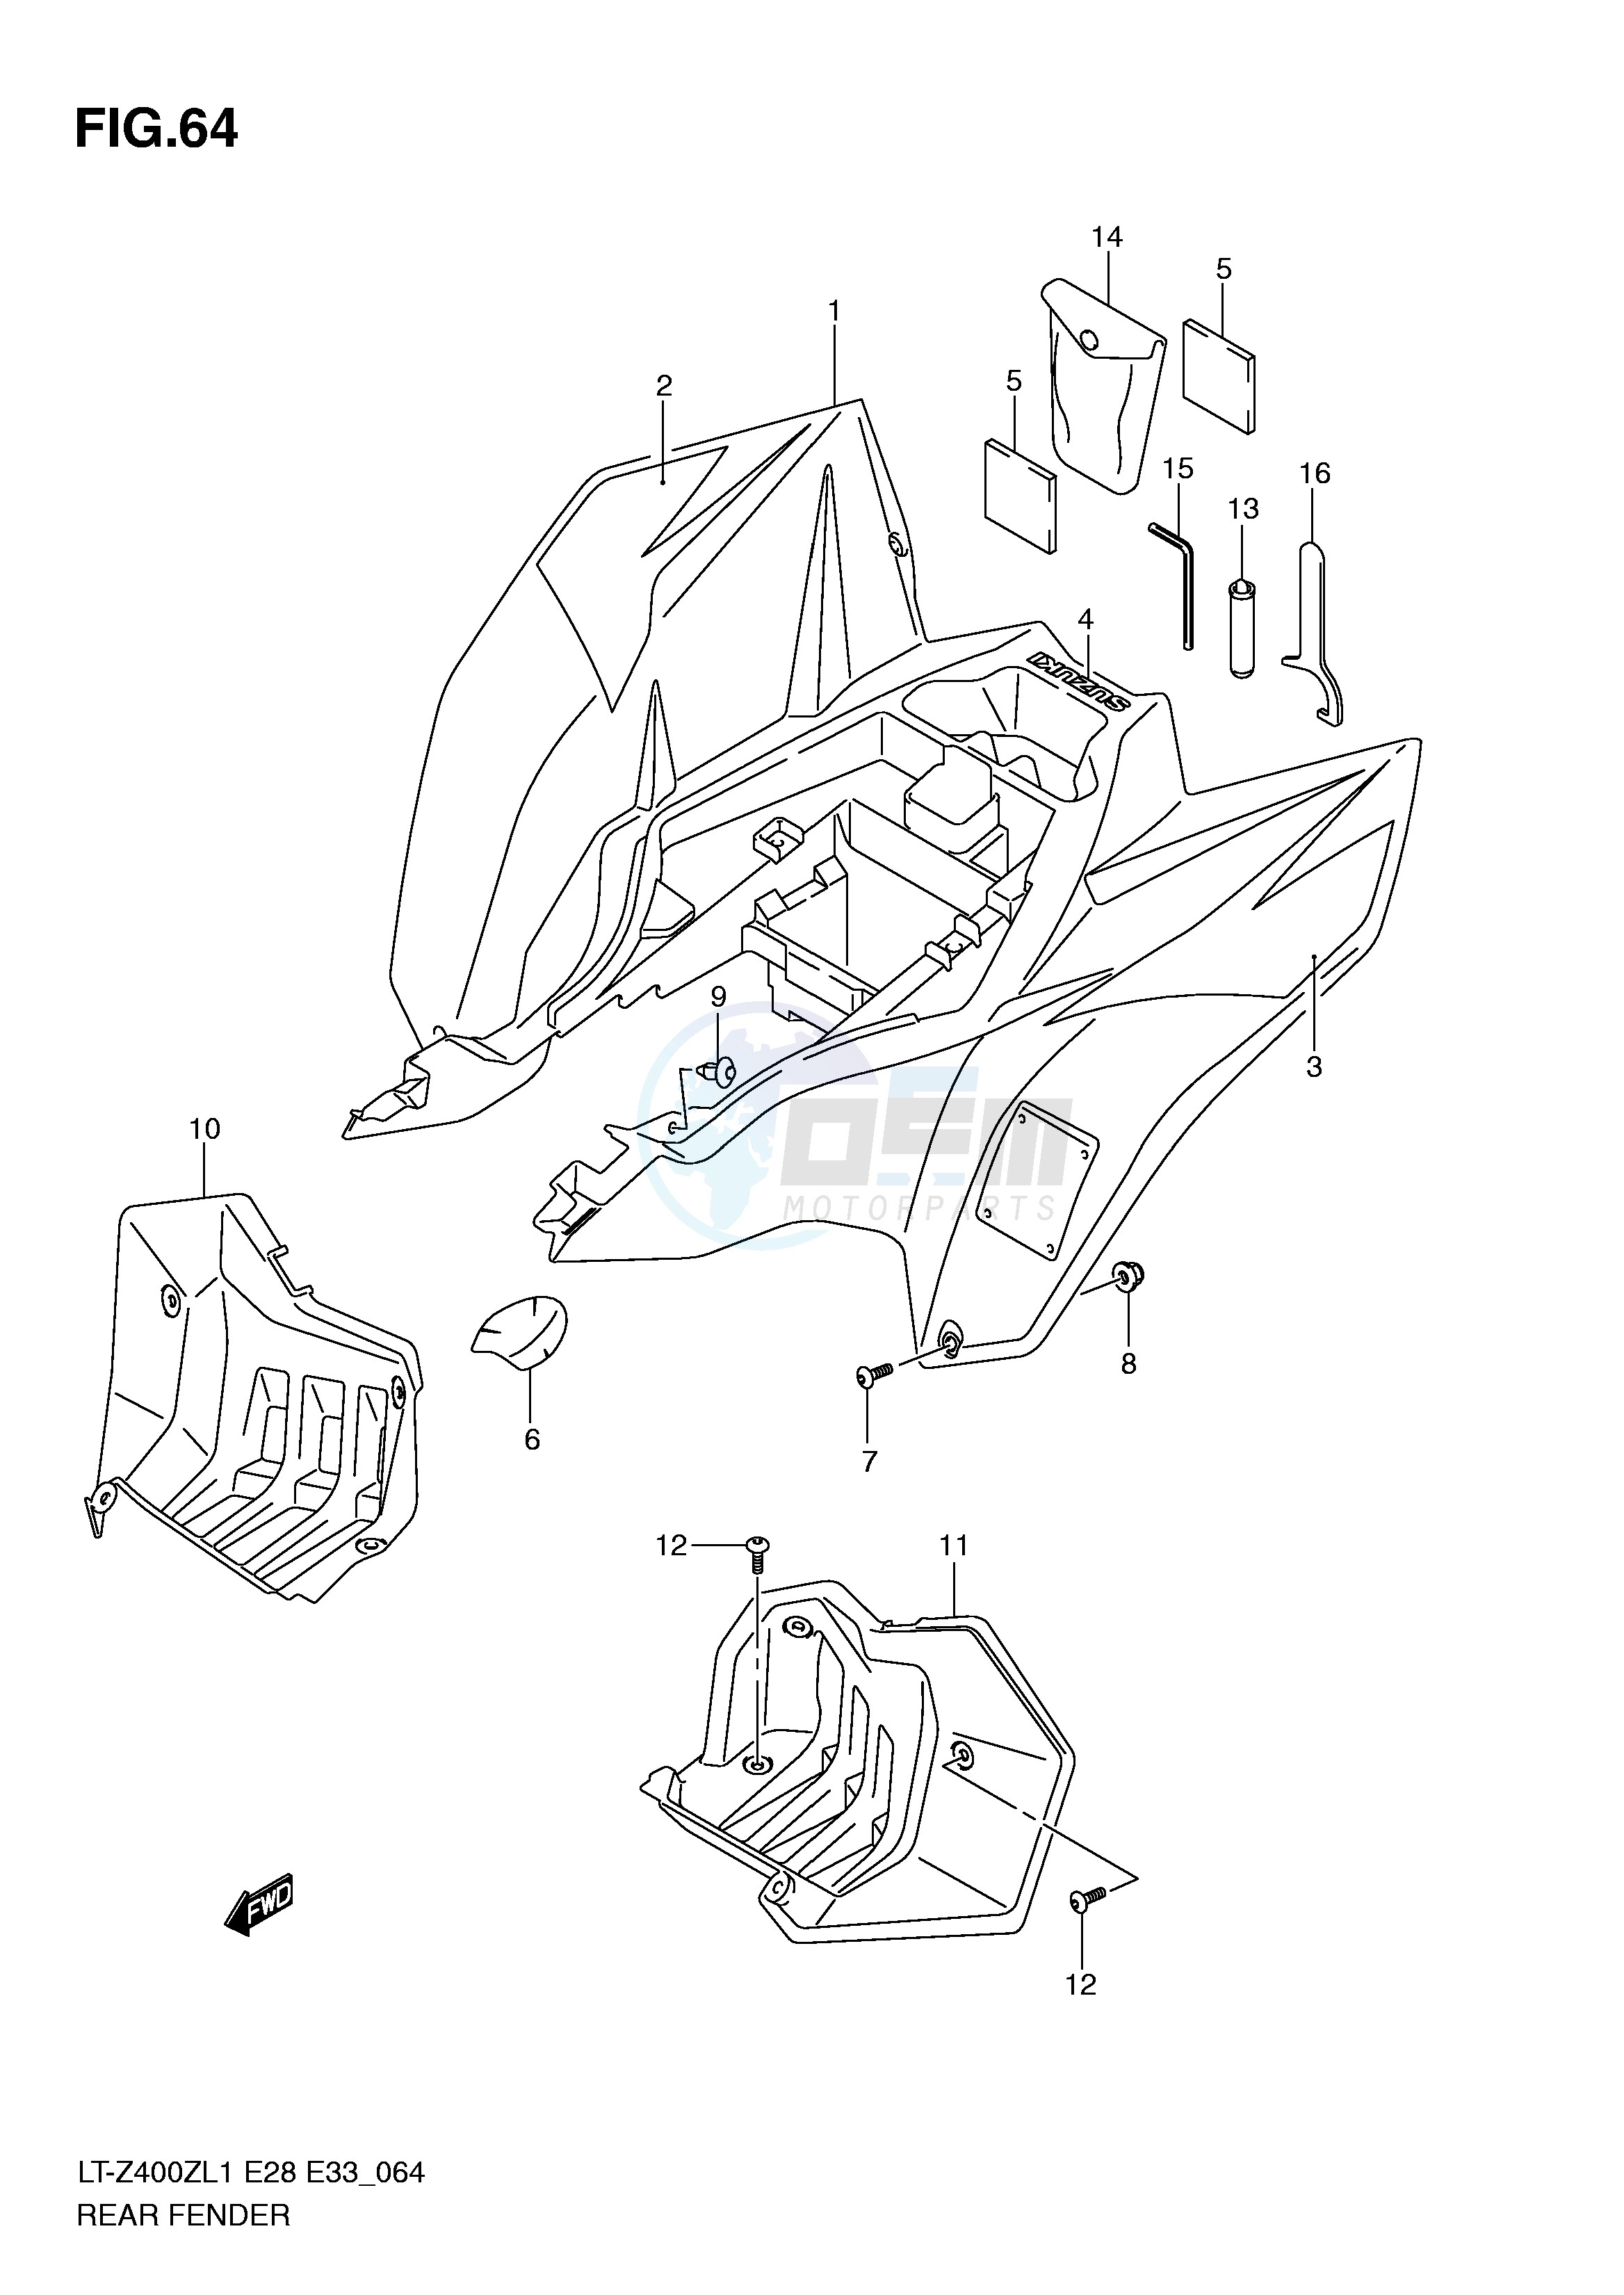 REAR FENDER (LT-Z400L1 E28) blueprint